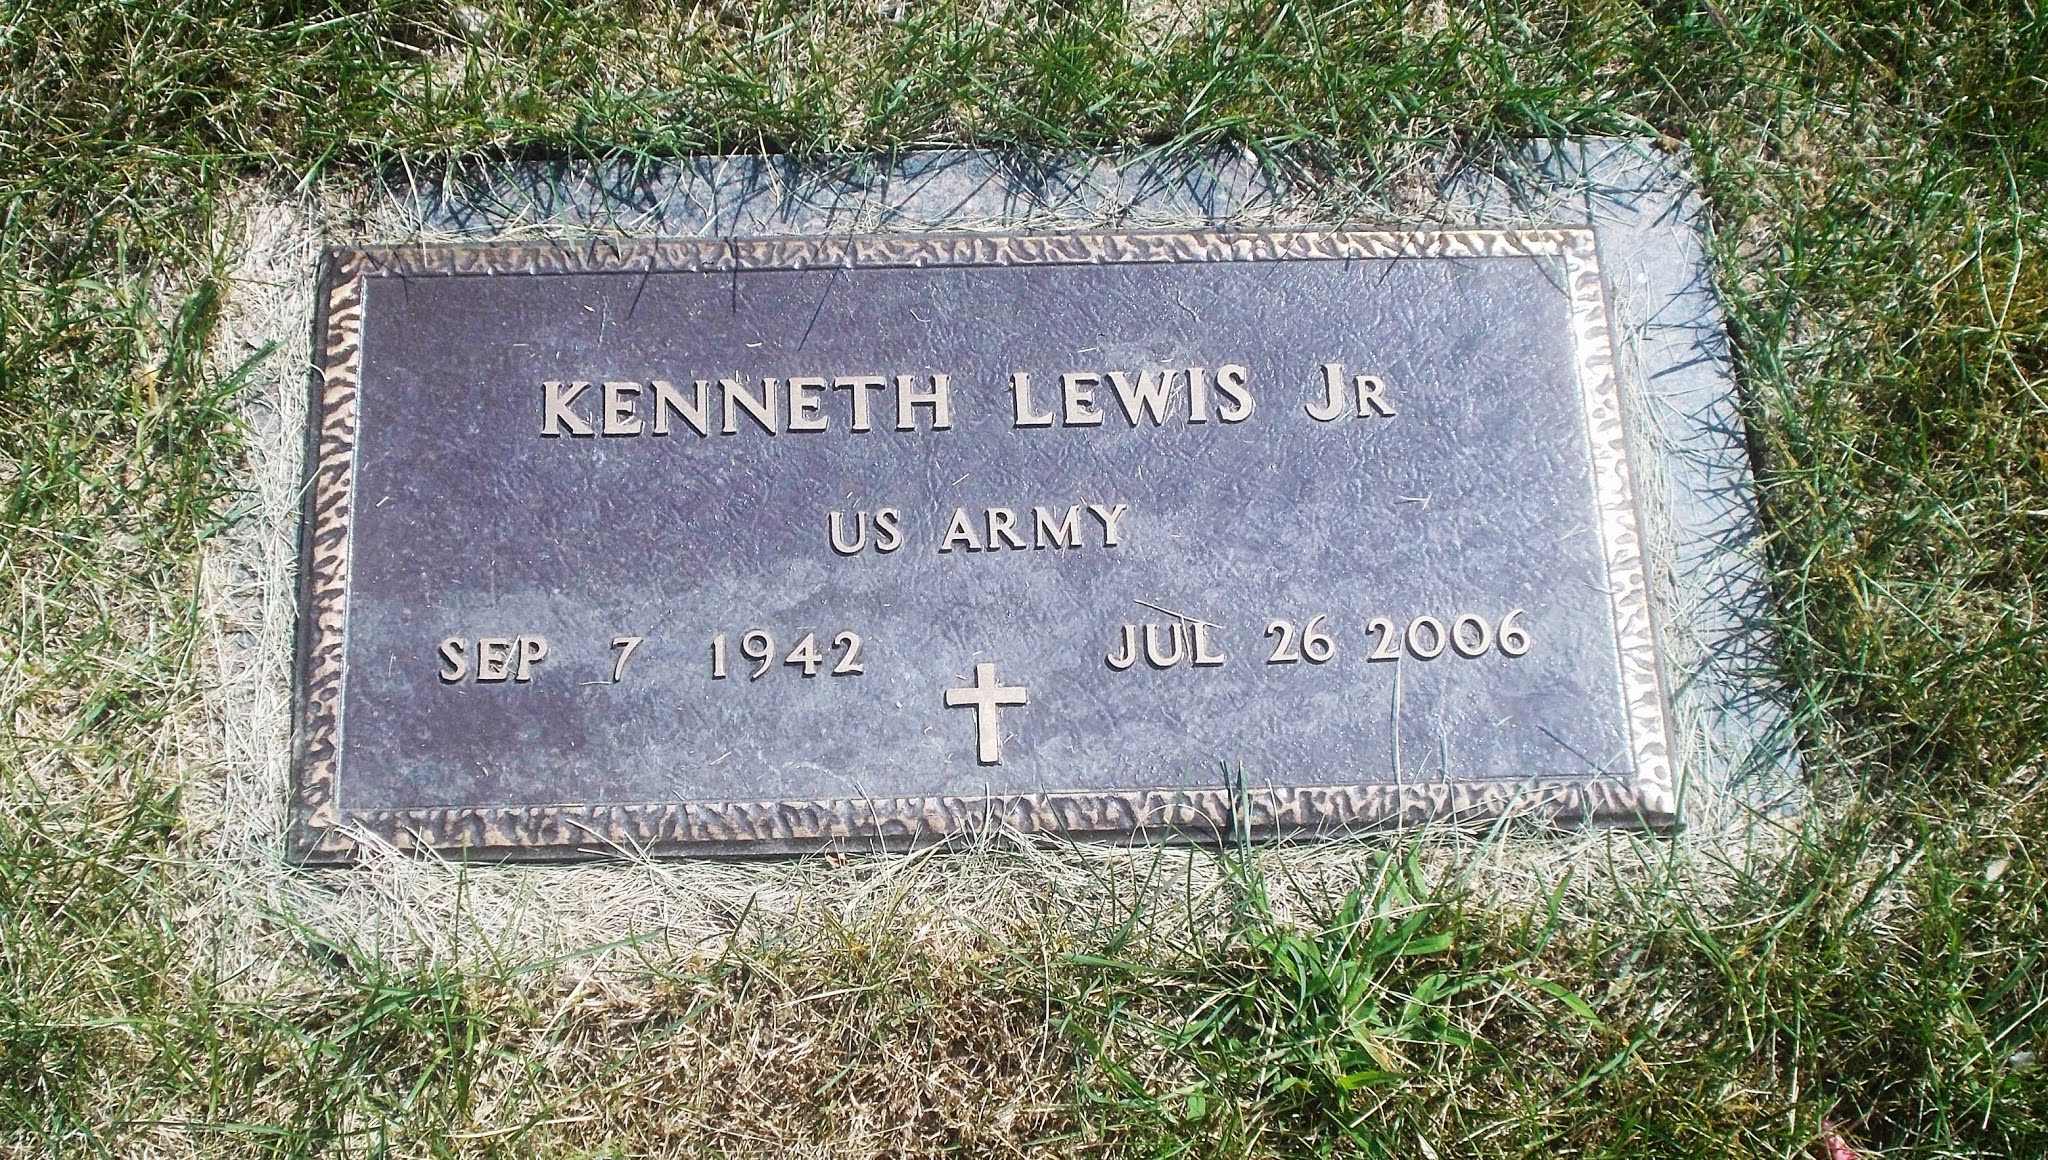 Kenneth Lewis, Jr